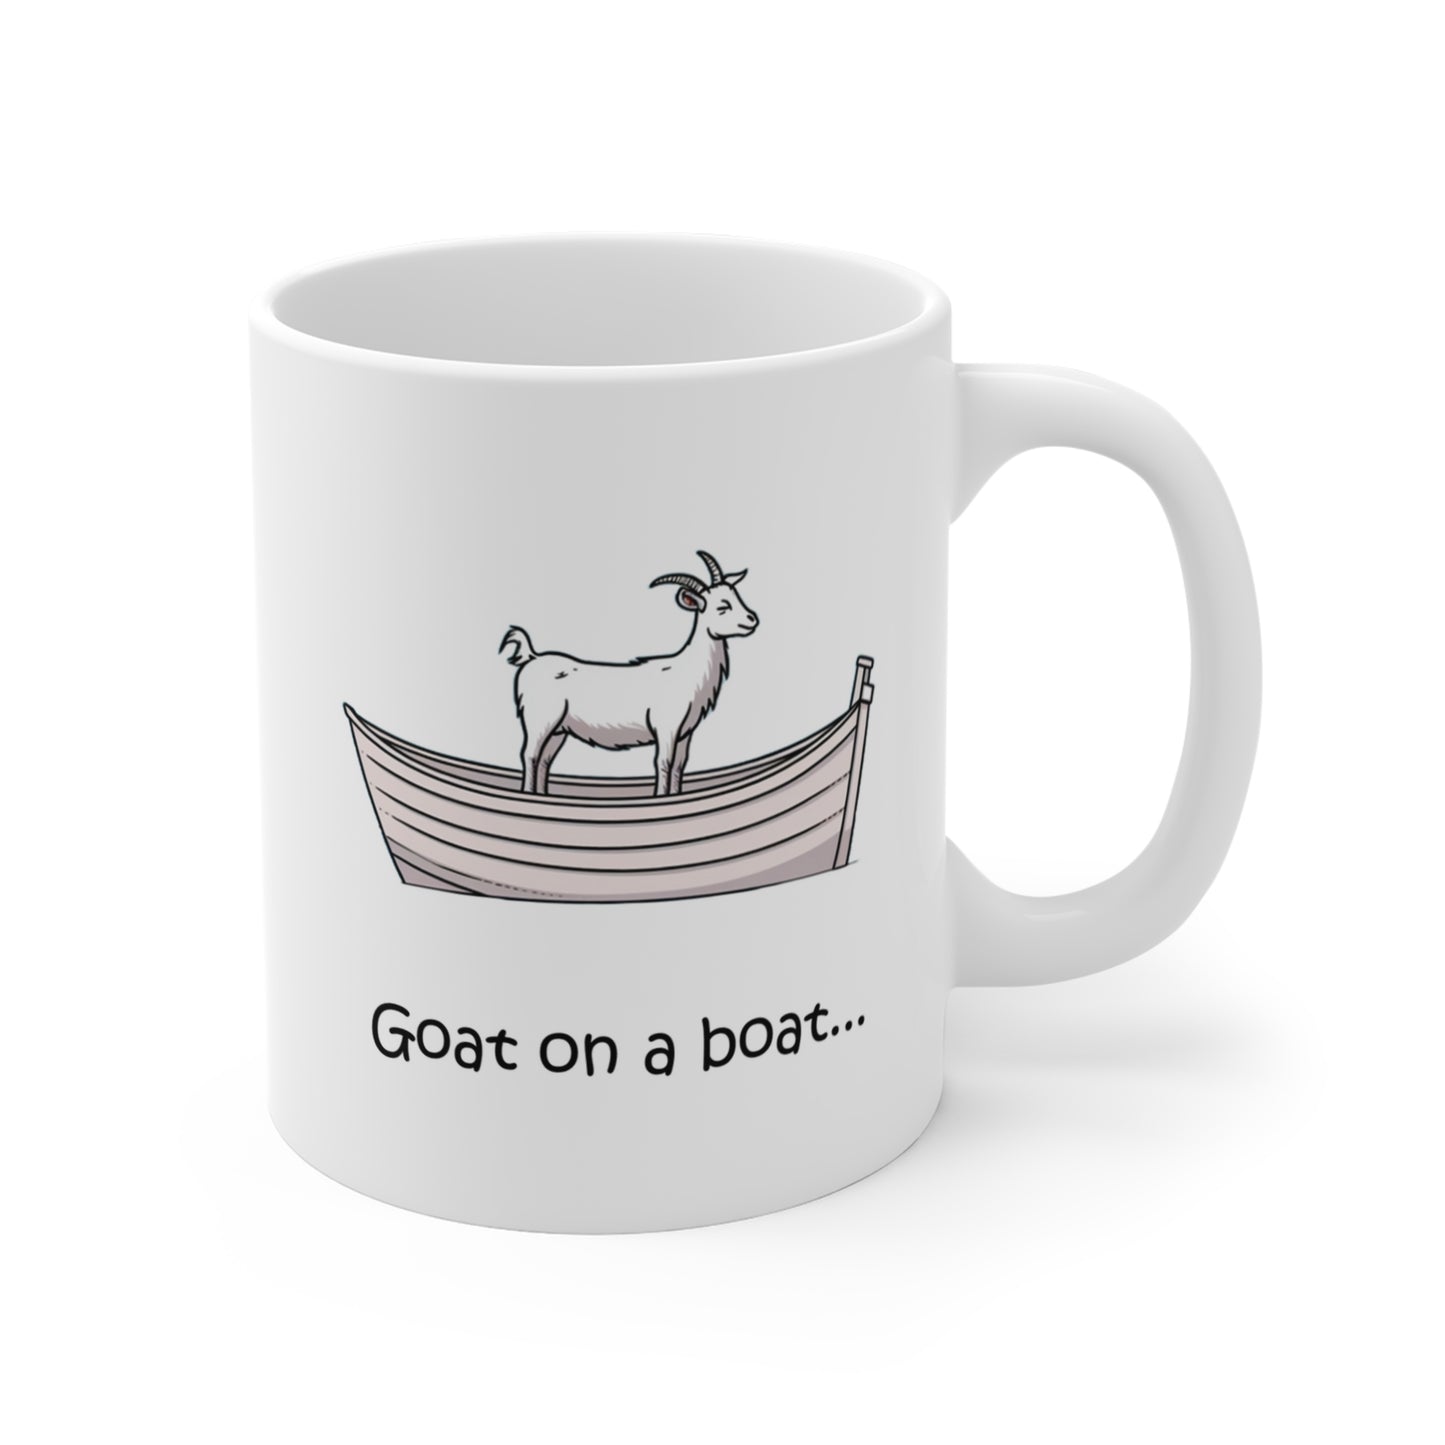 Goat on a boat - Mug 11oz